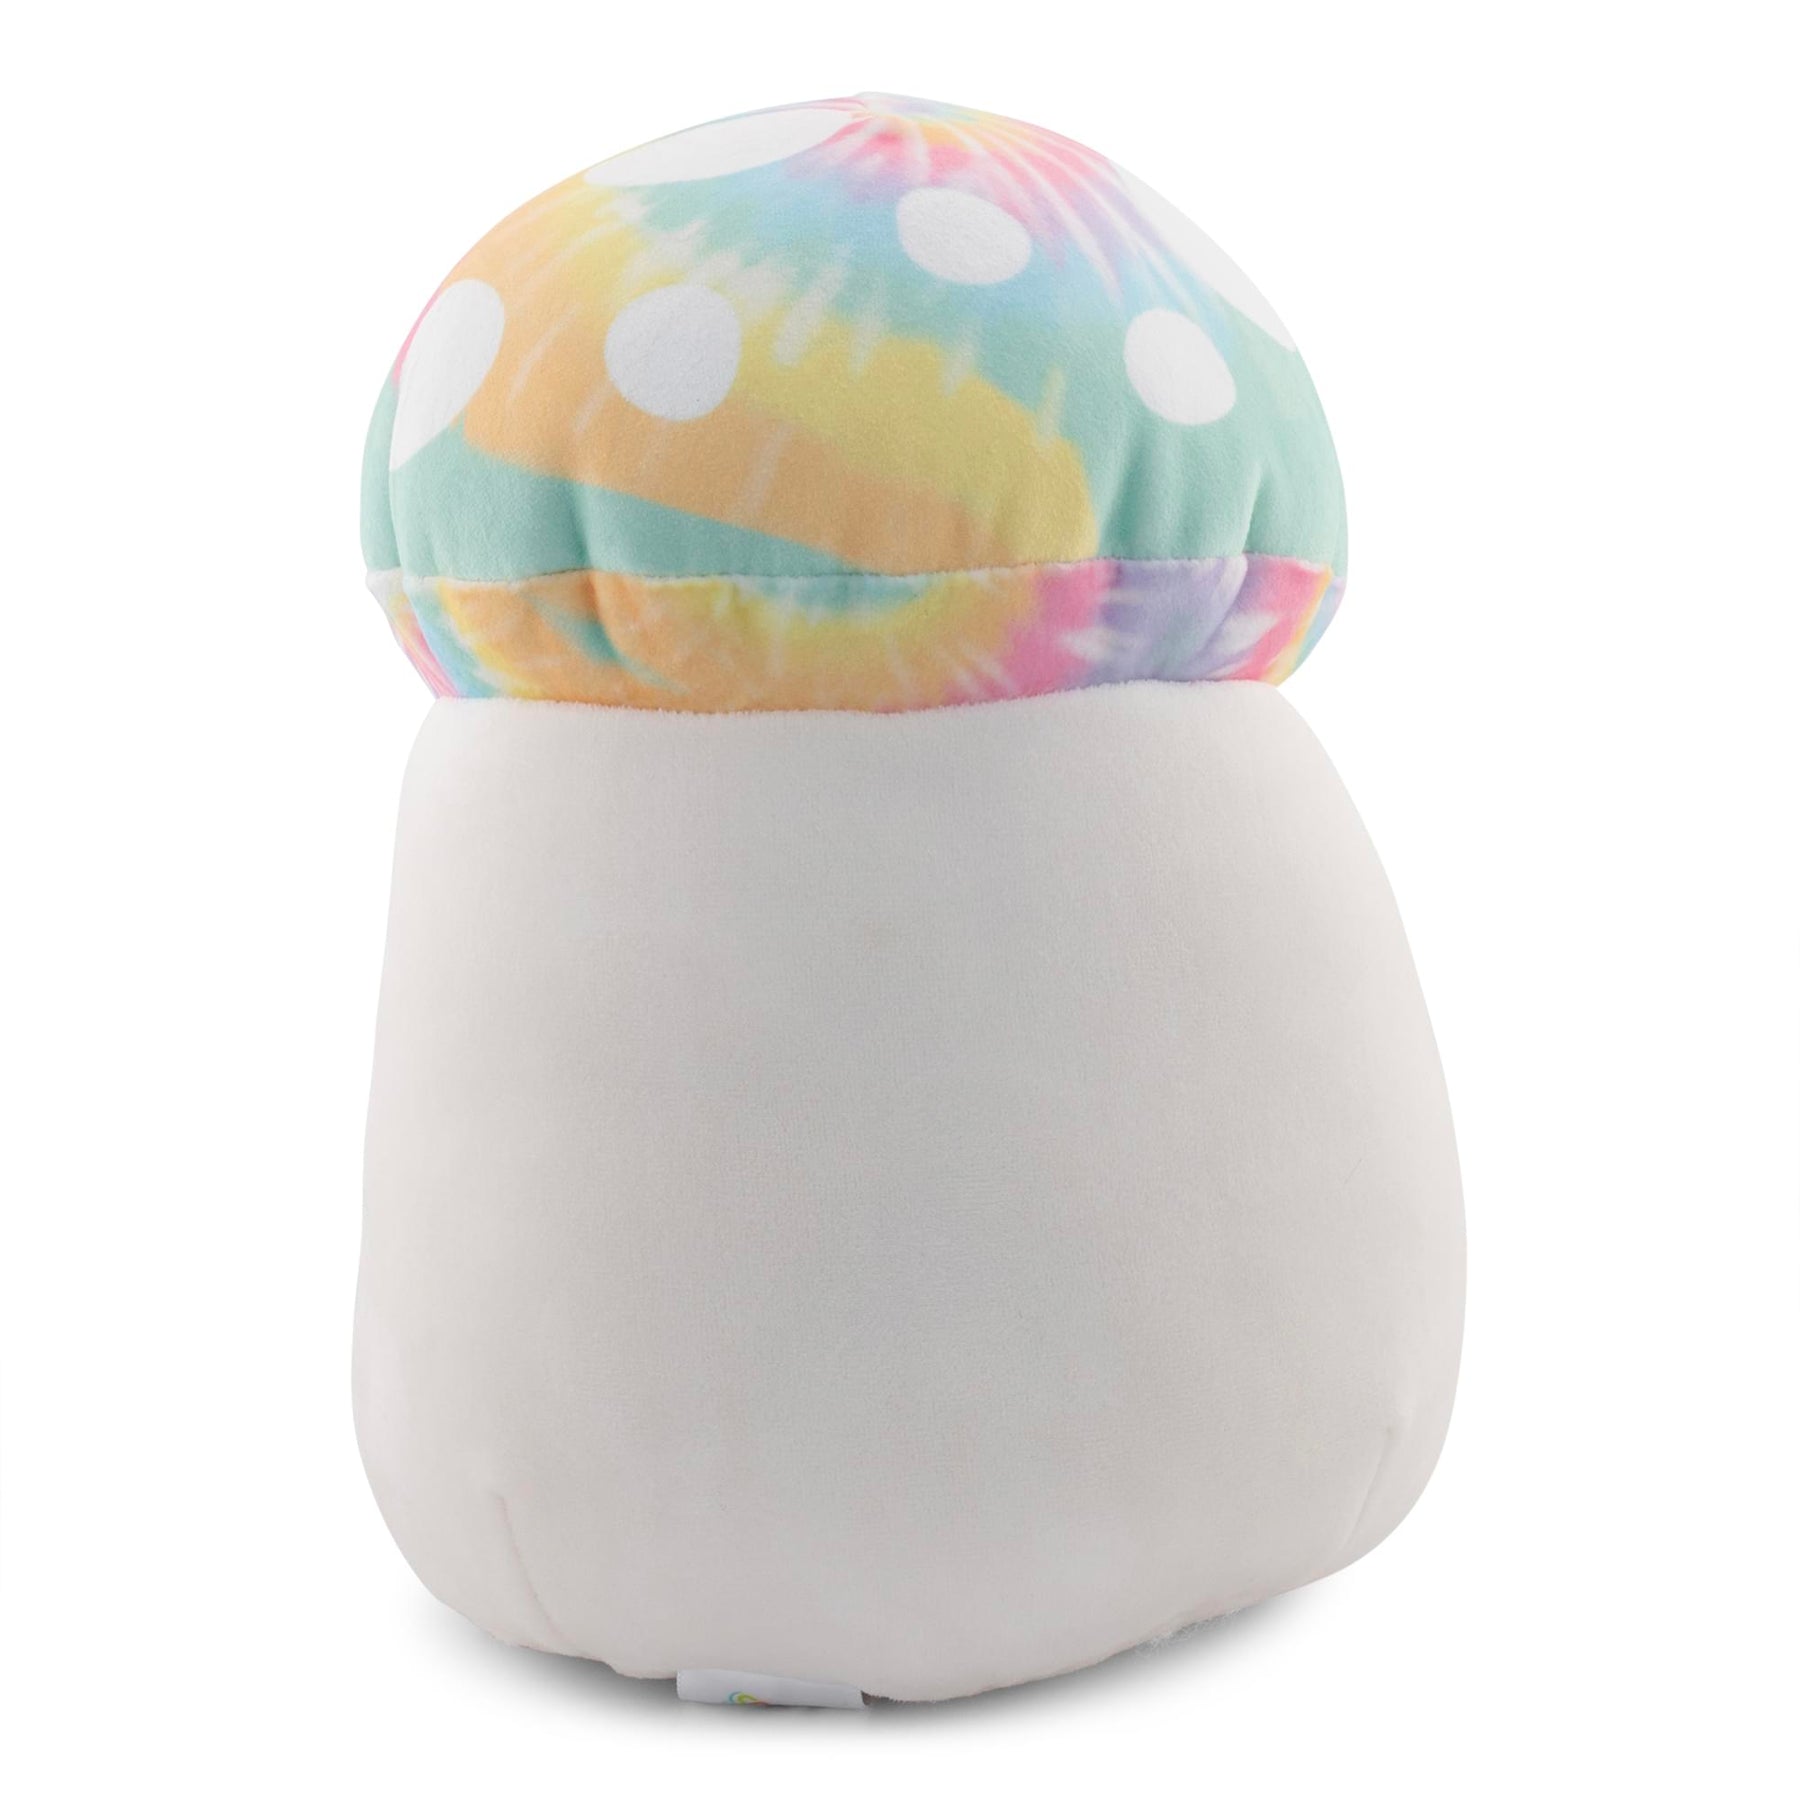 Squishmallows Fan Favorites 8 Inch Plush | Kervena The Tie Dye Mushroom